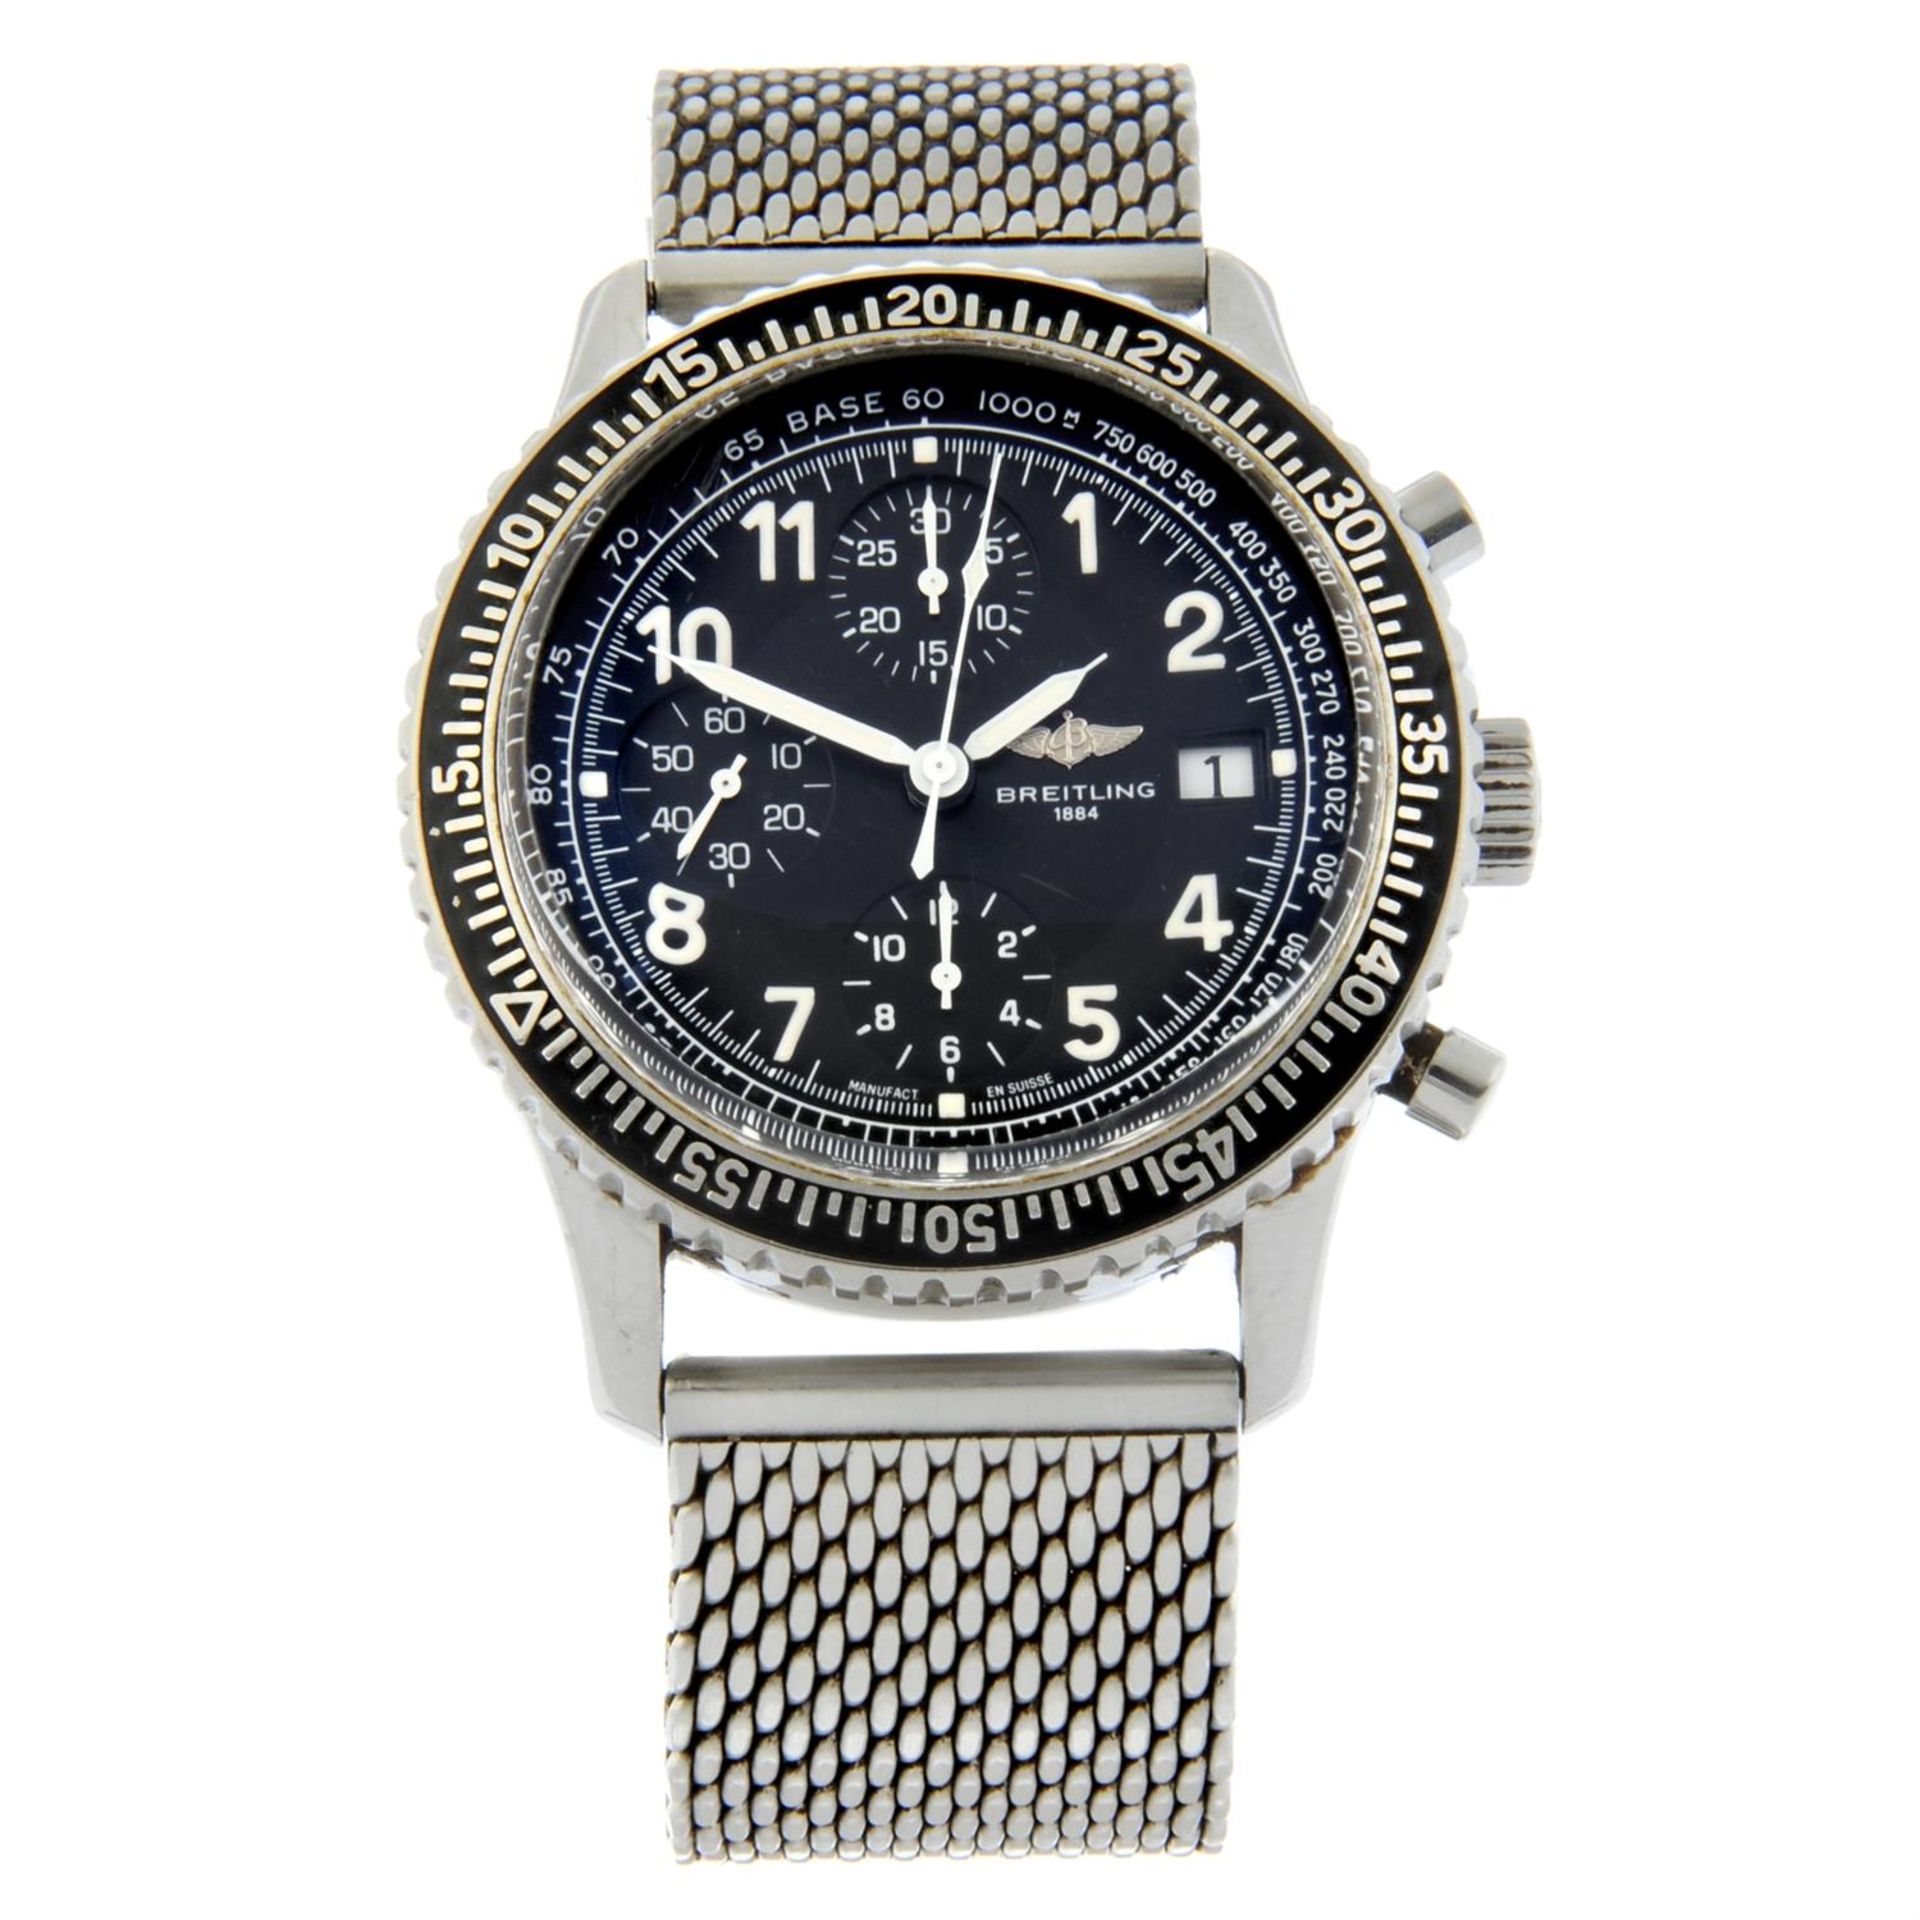 Breitling - an Aviastar chronograph watch, 41.5mm.